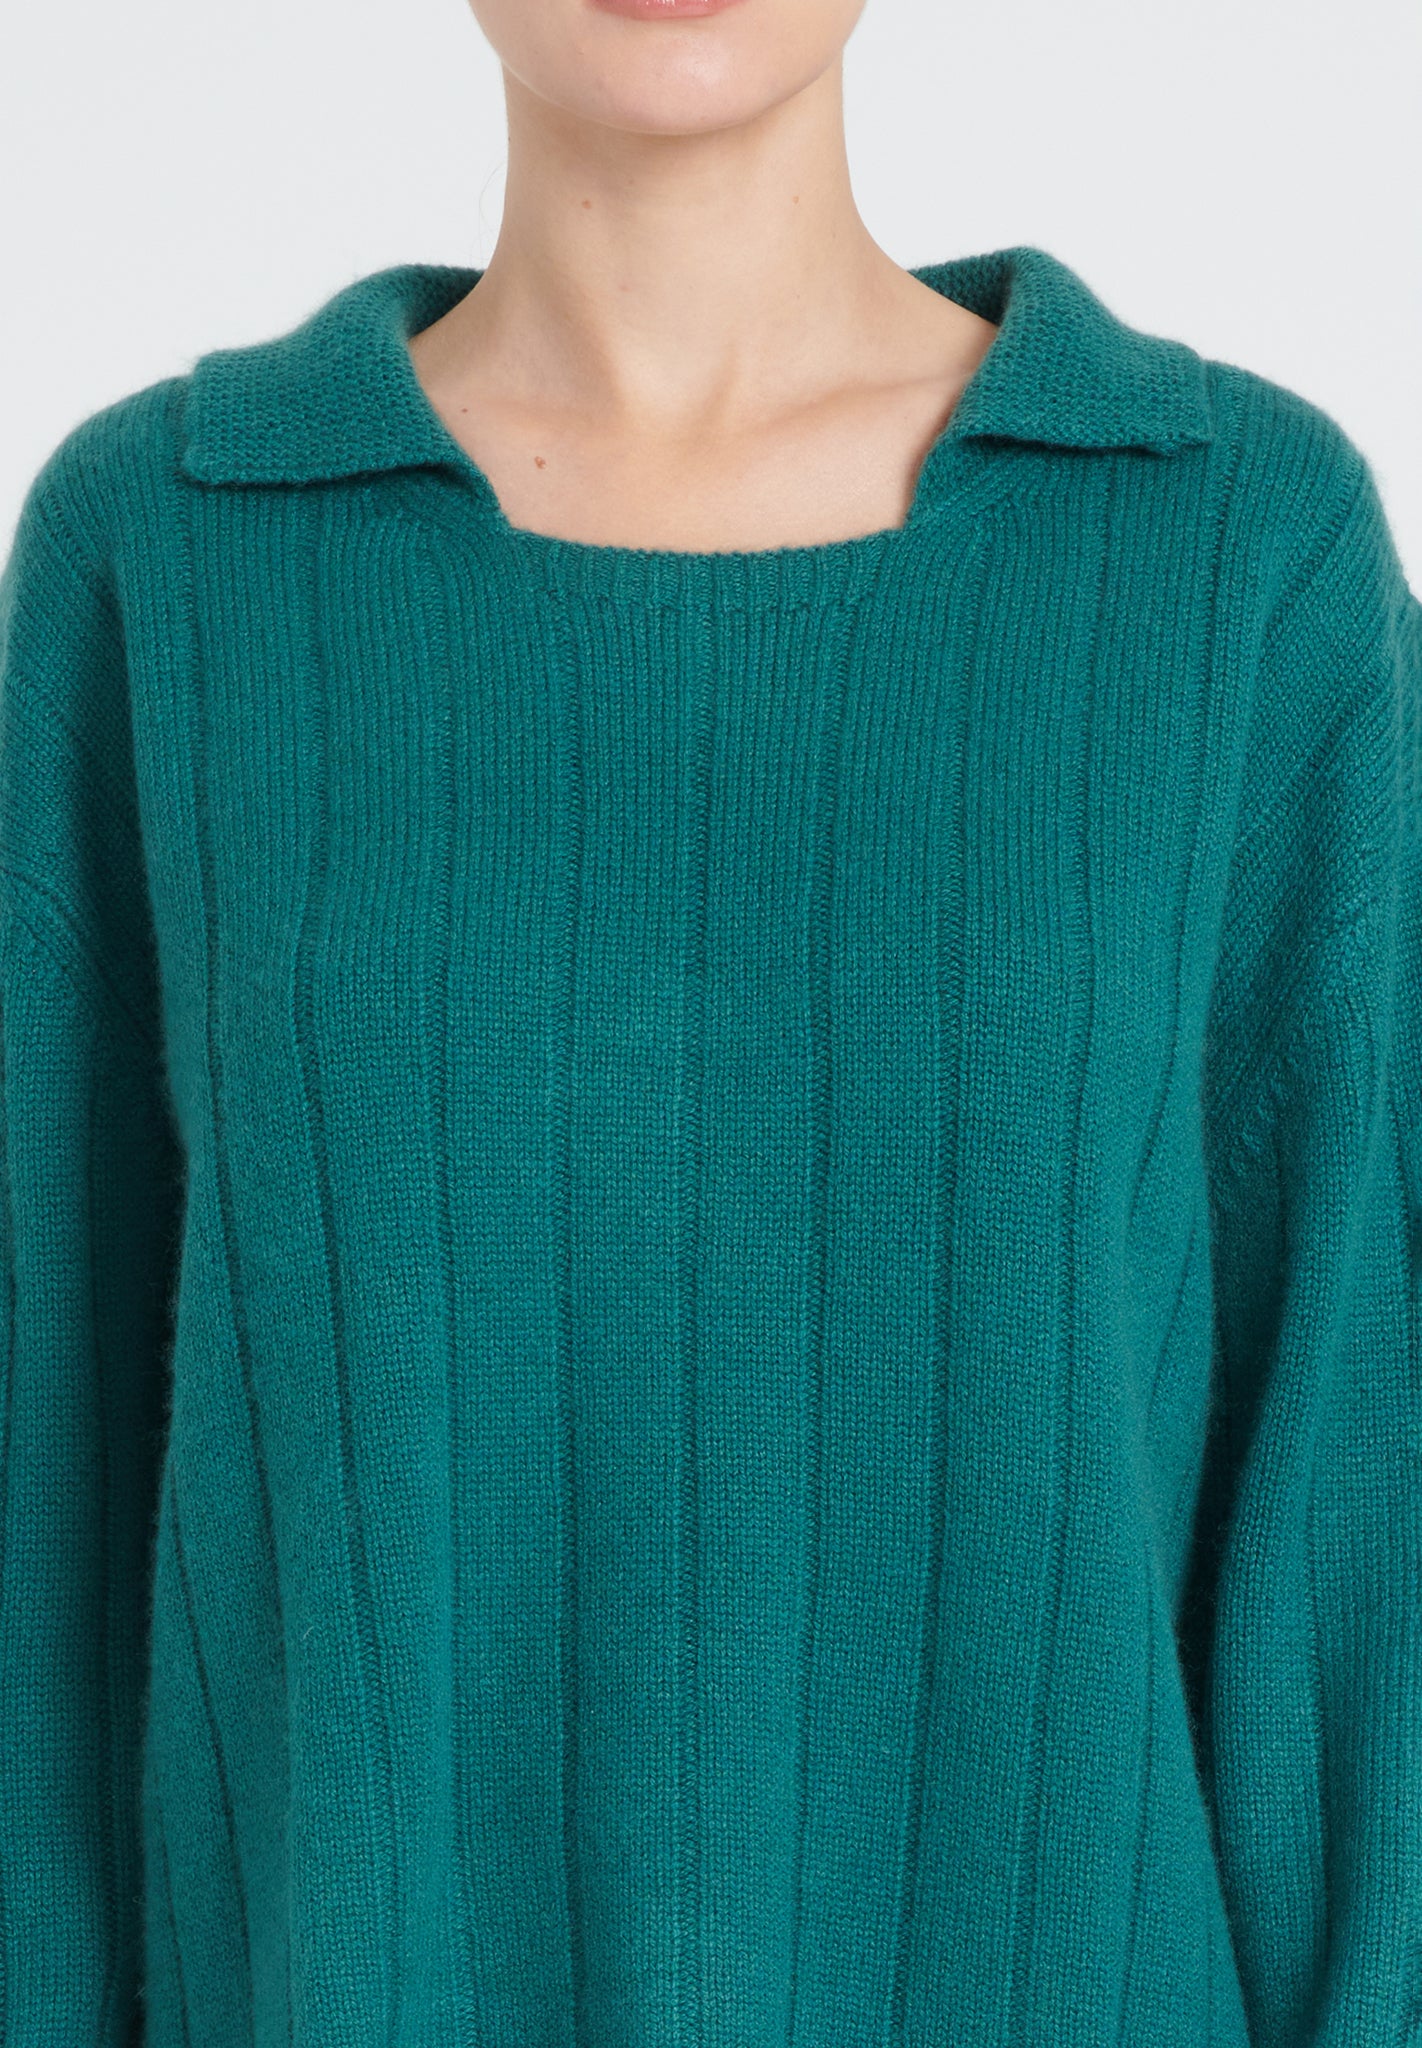 ZAYA 17 Dark green 6-thread cashmere sweater with peter pan collar